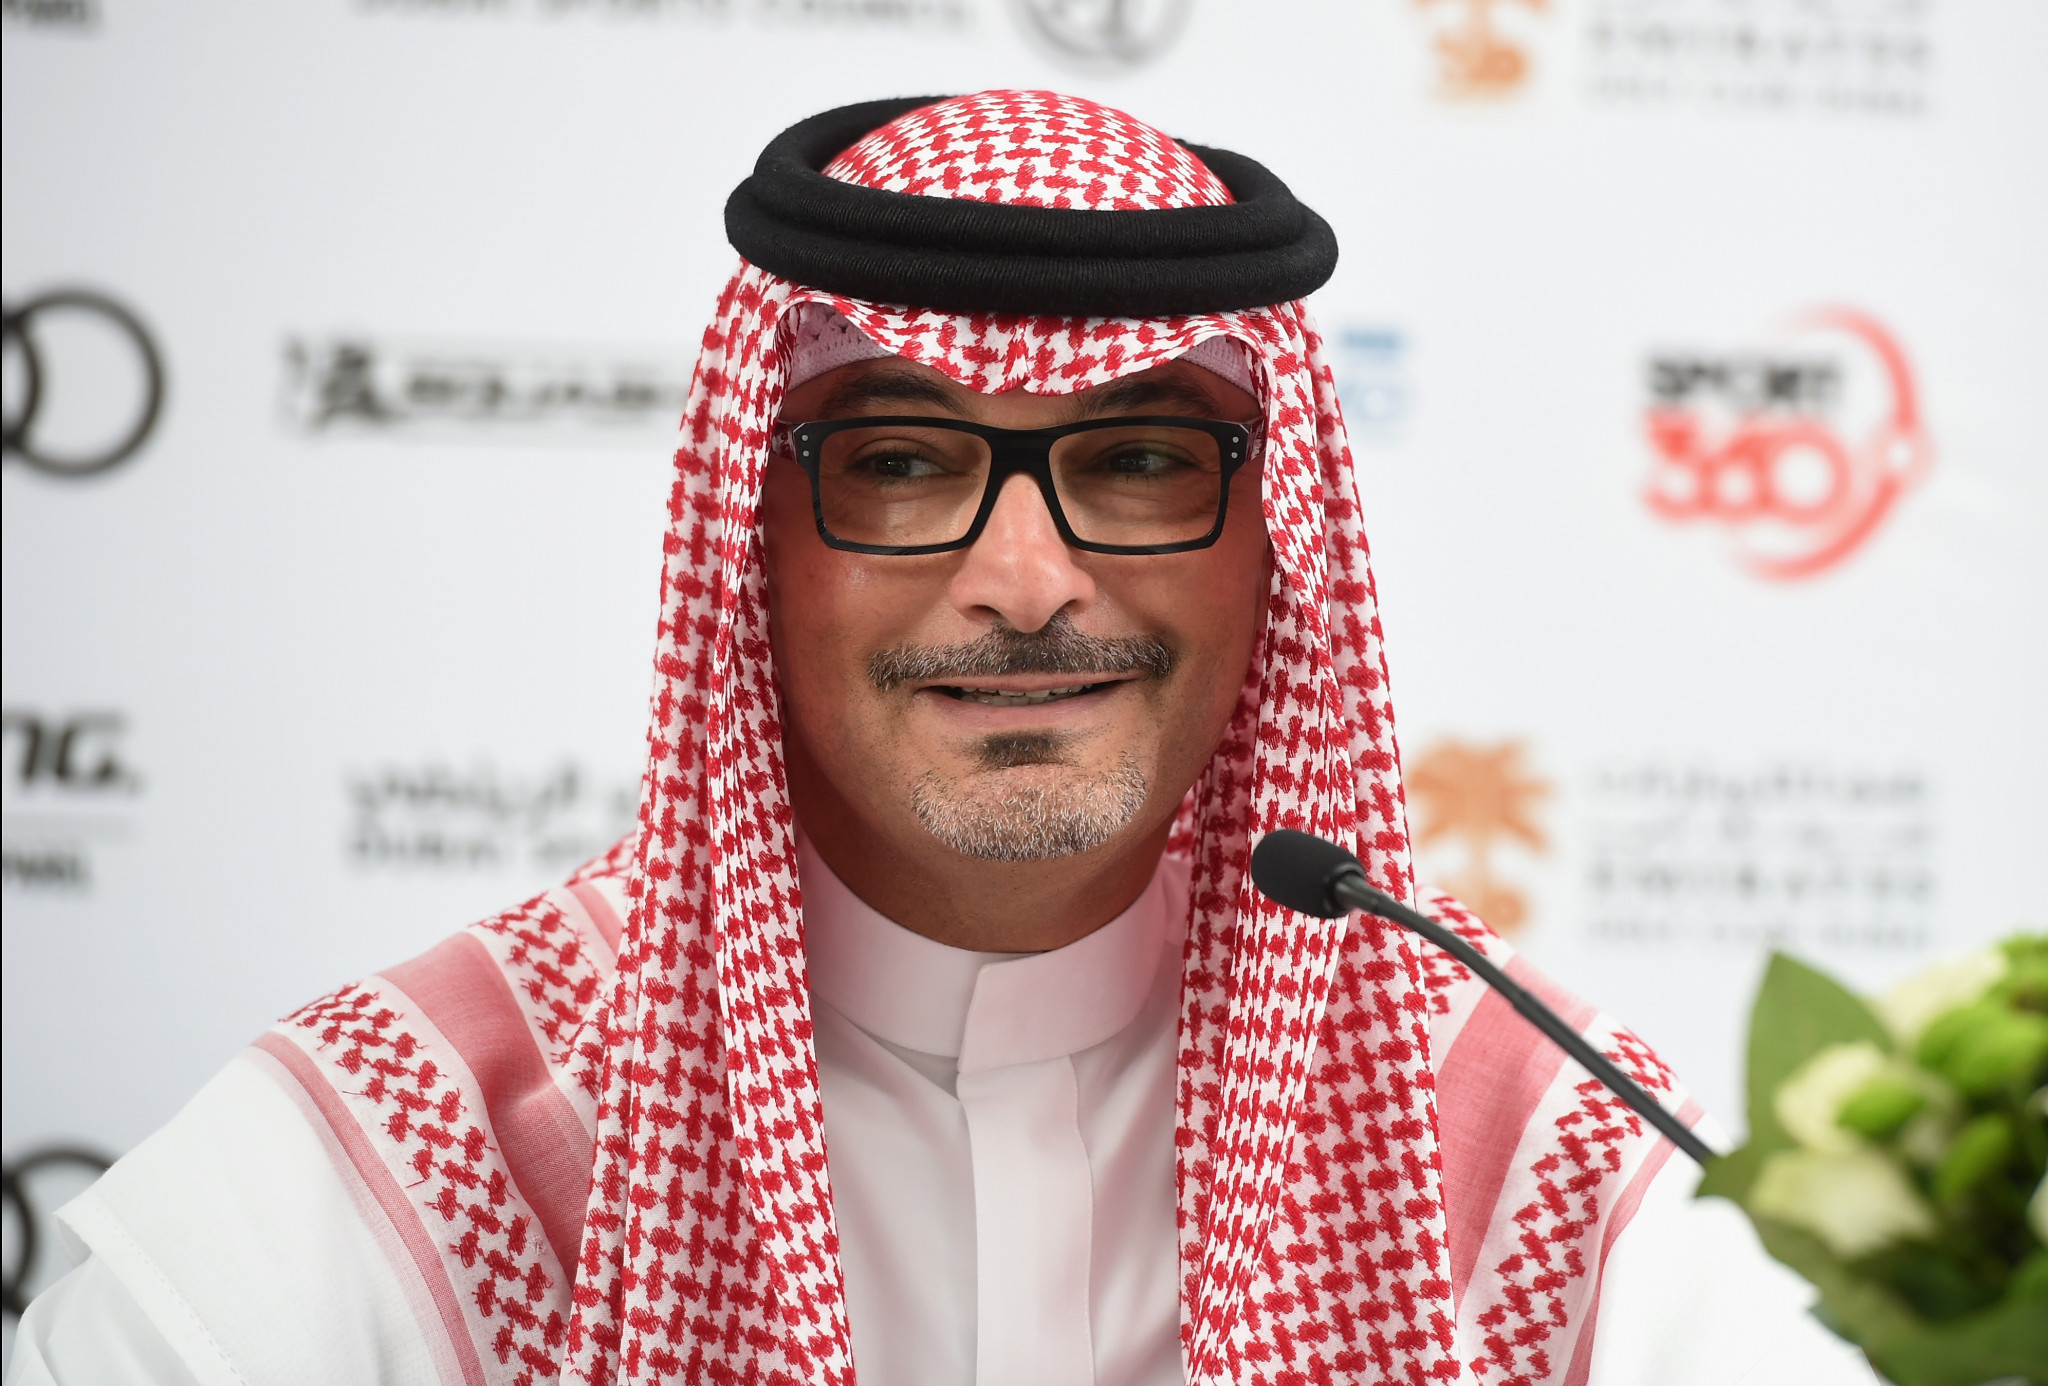 Professional Squash Association Chairman Ziad Al-Turki has welcomed the 